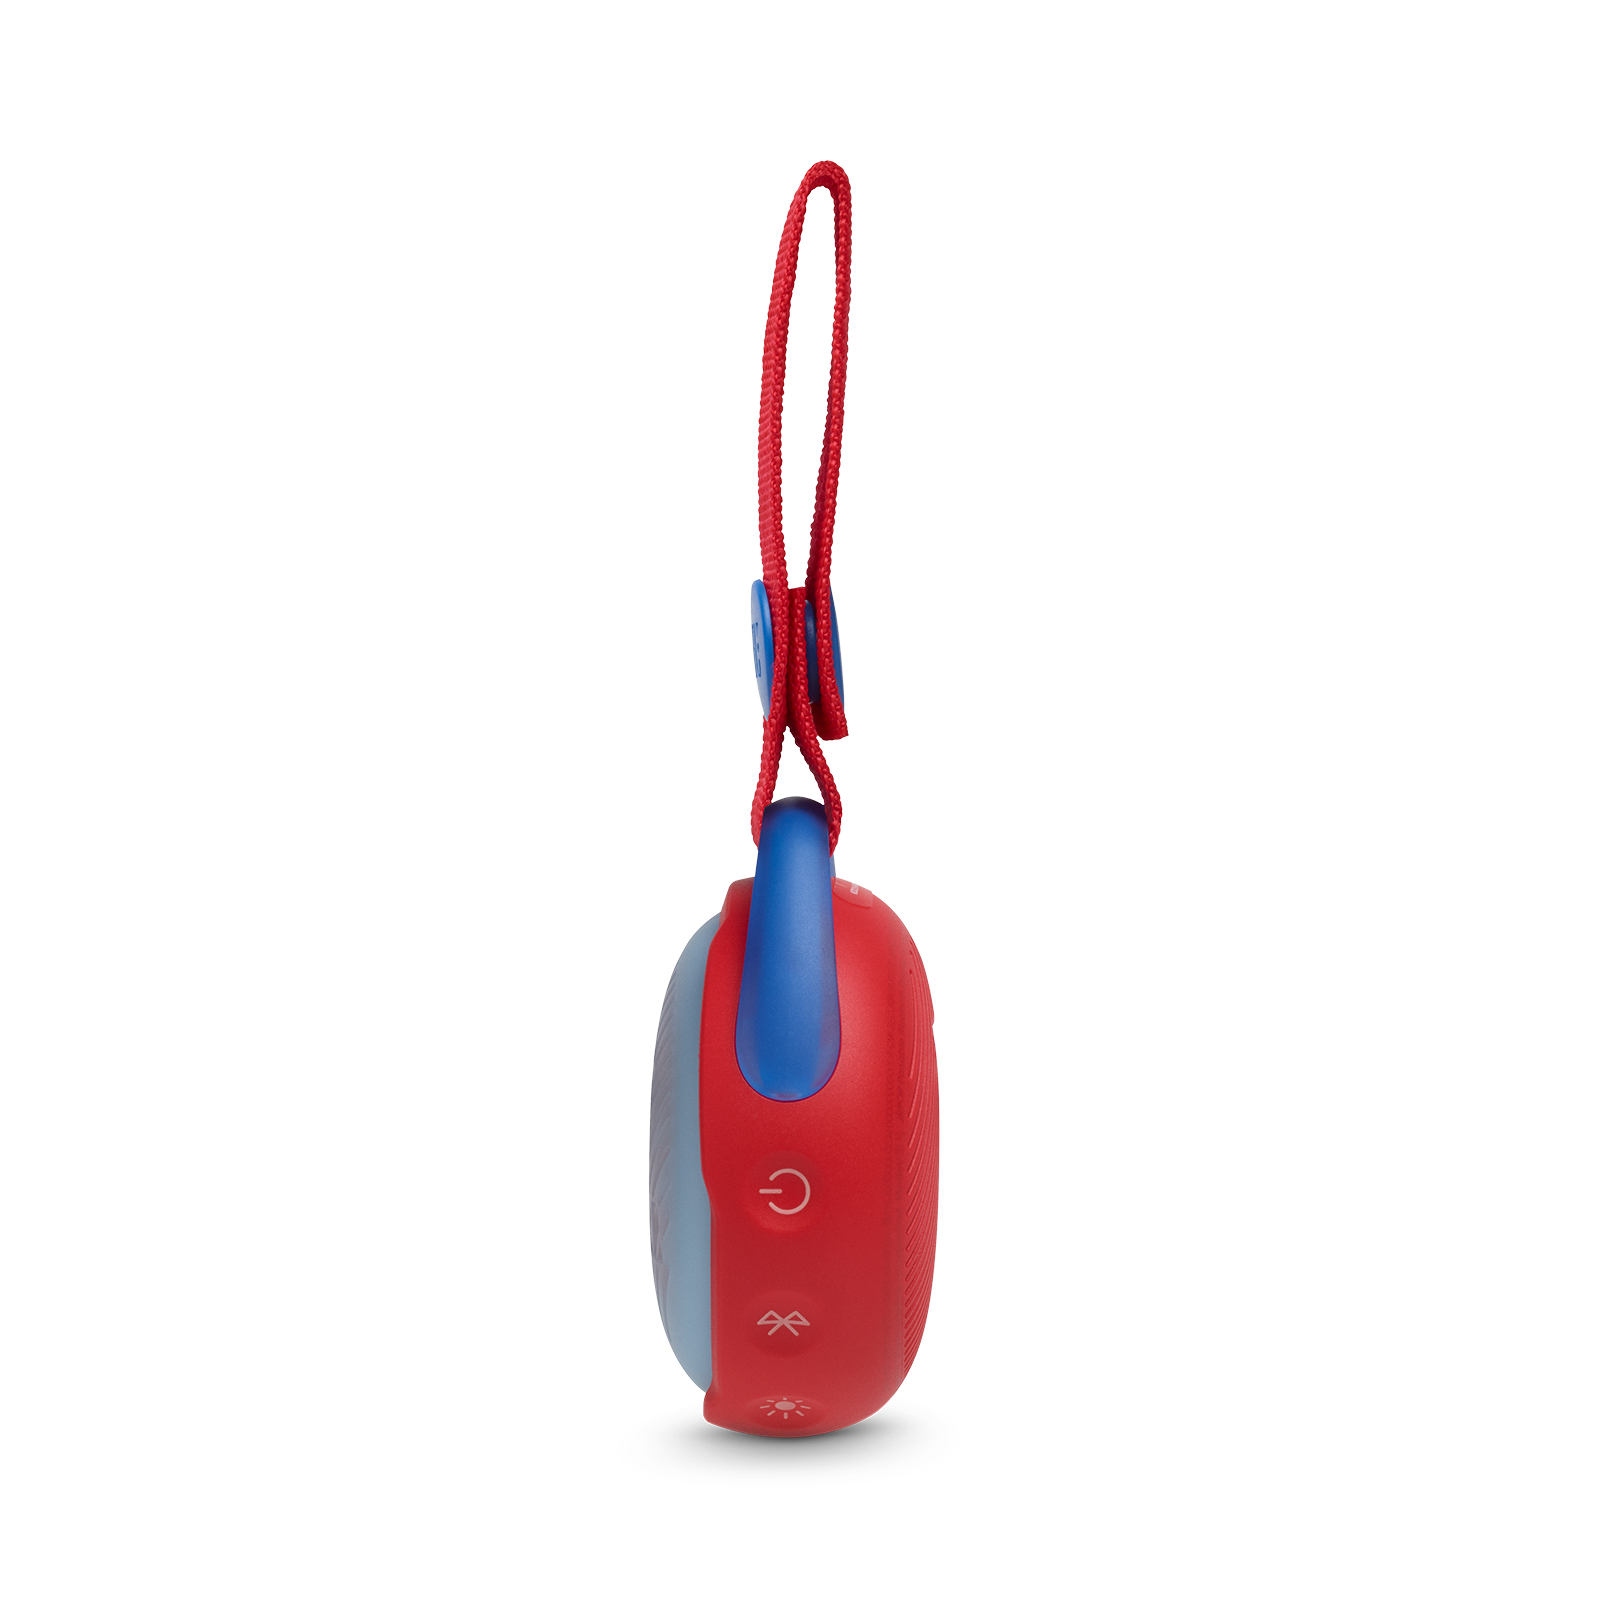 JBL JR Pop - Red - Portable speaker for kids - Detailshot 2